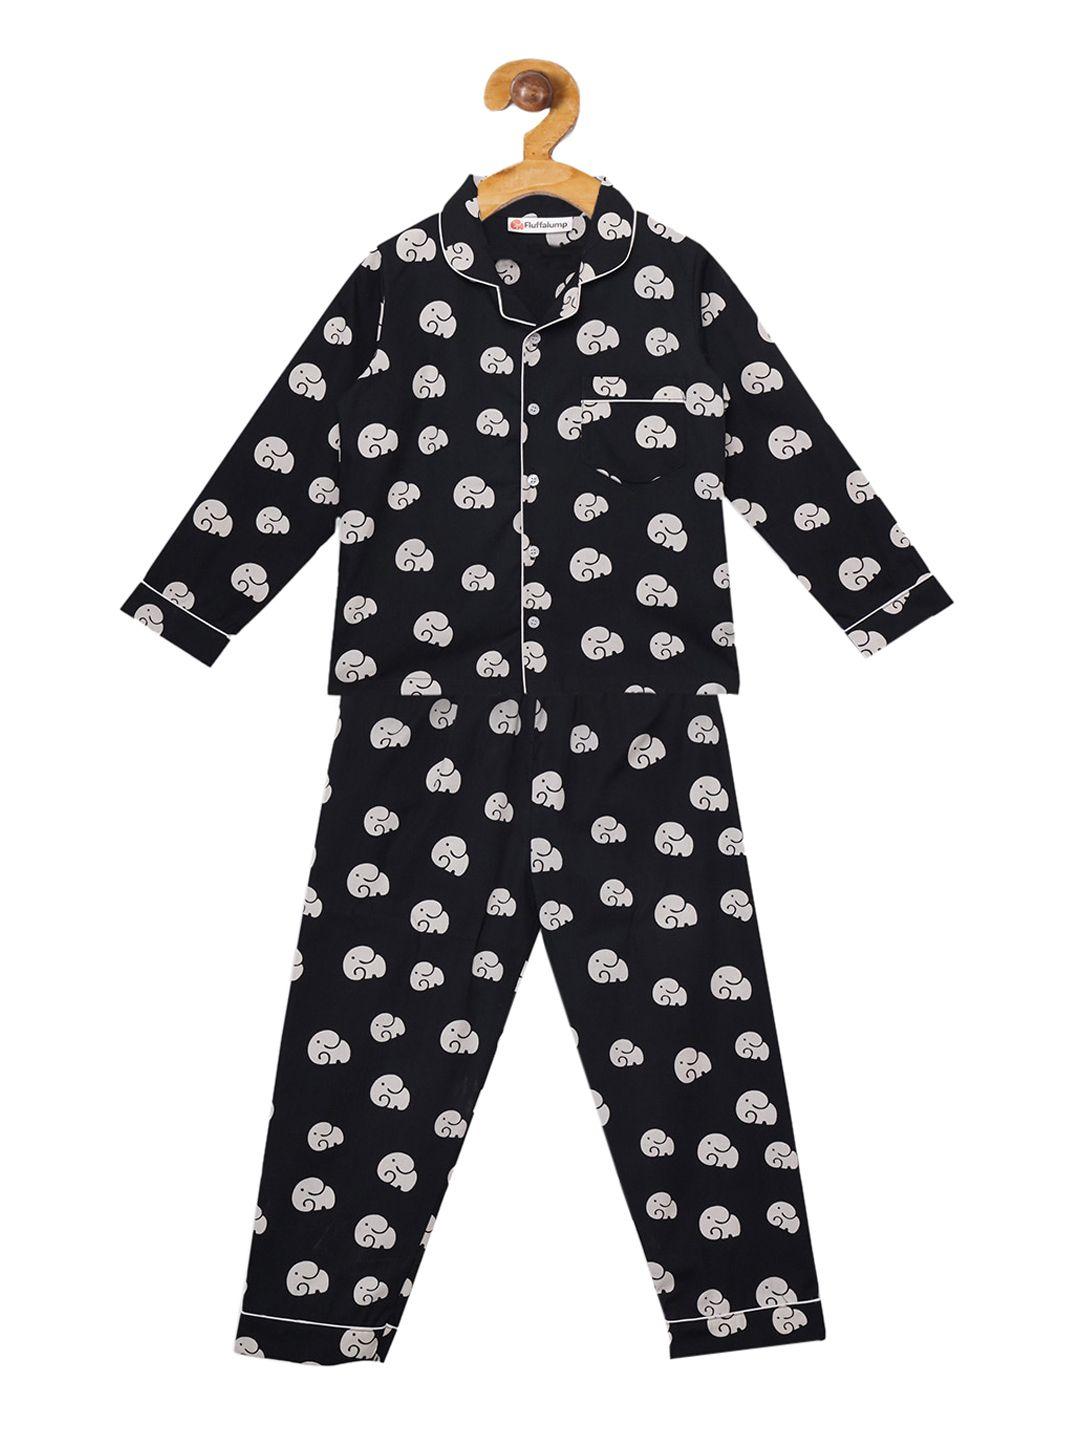 fluffalump unisex kids black & white printed night suit